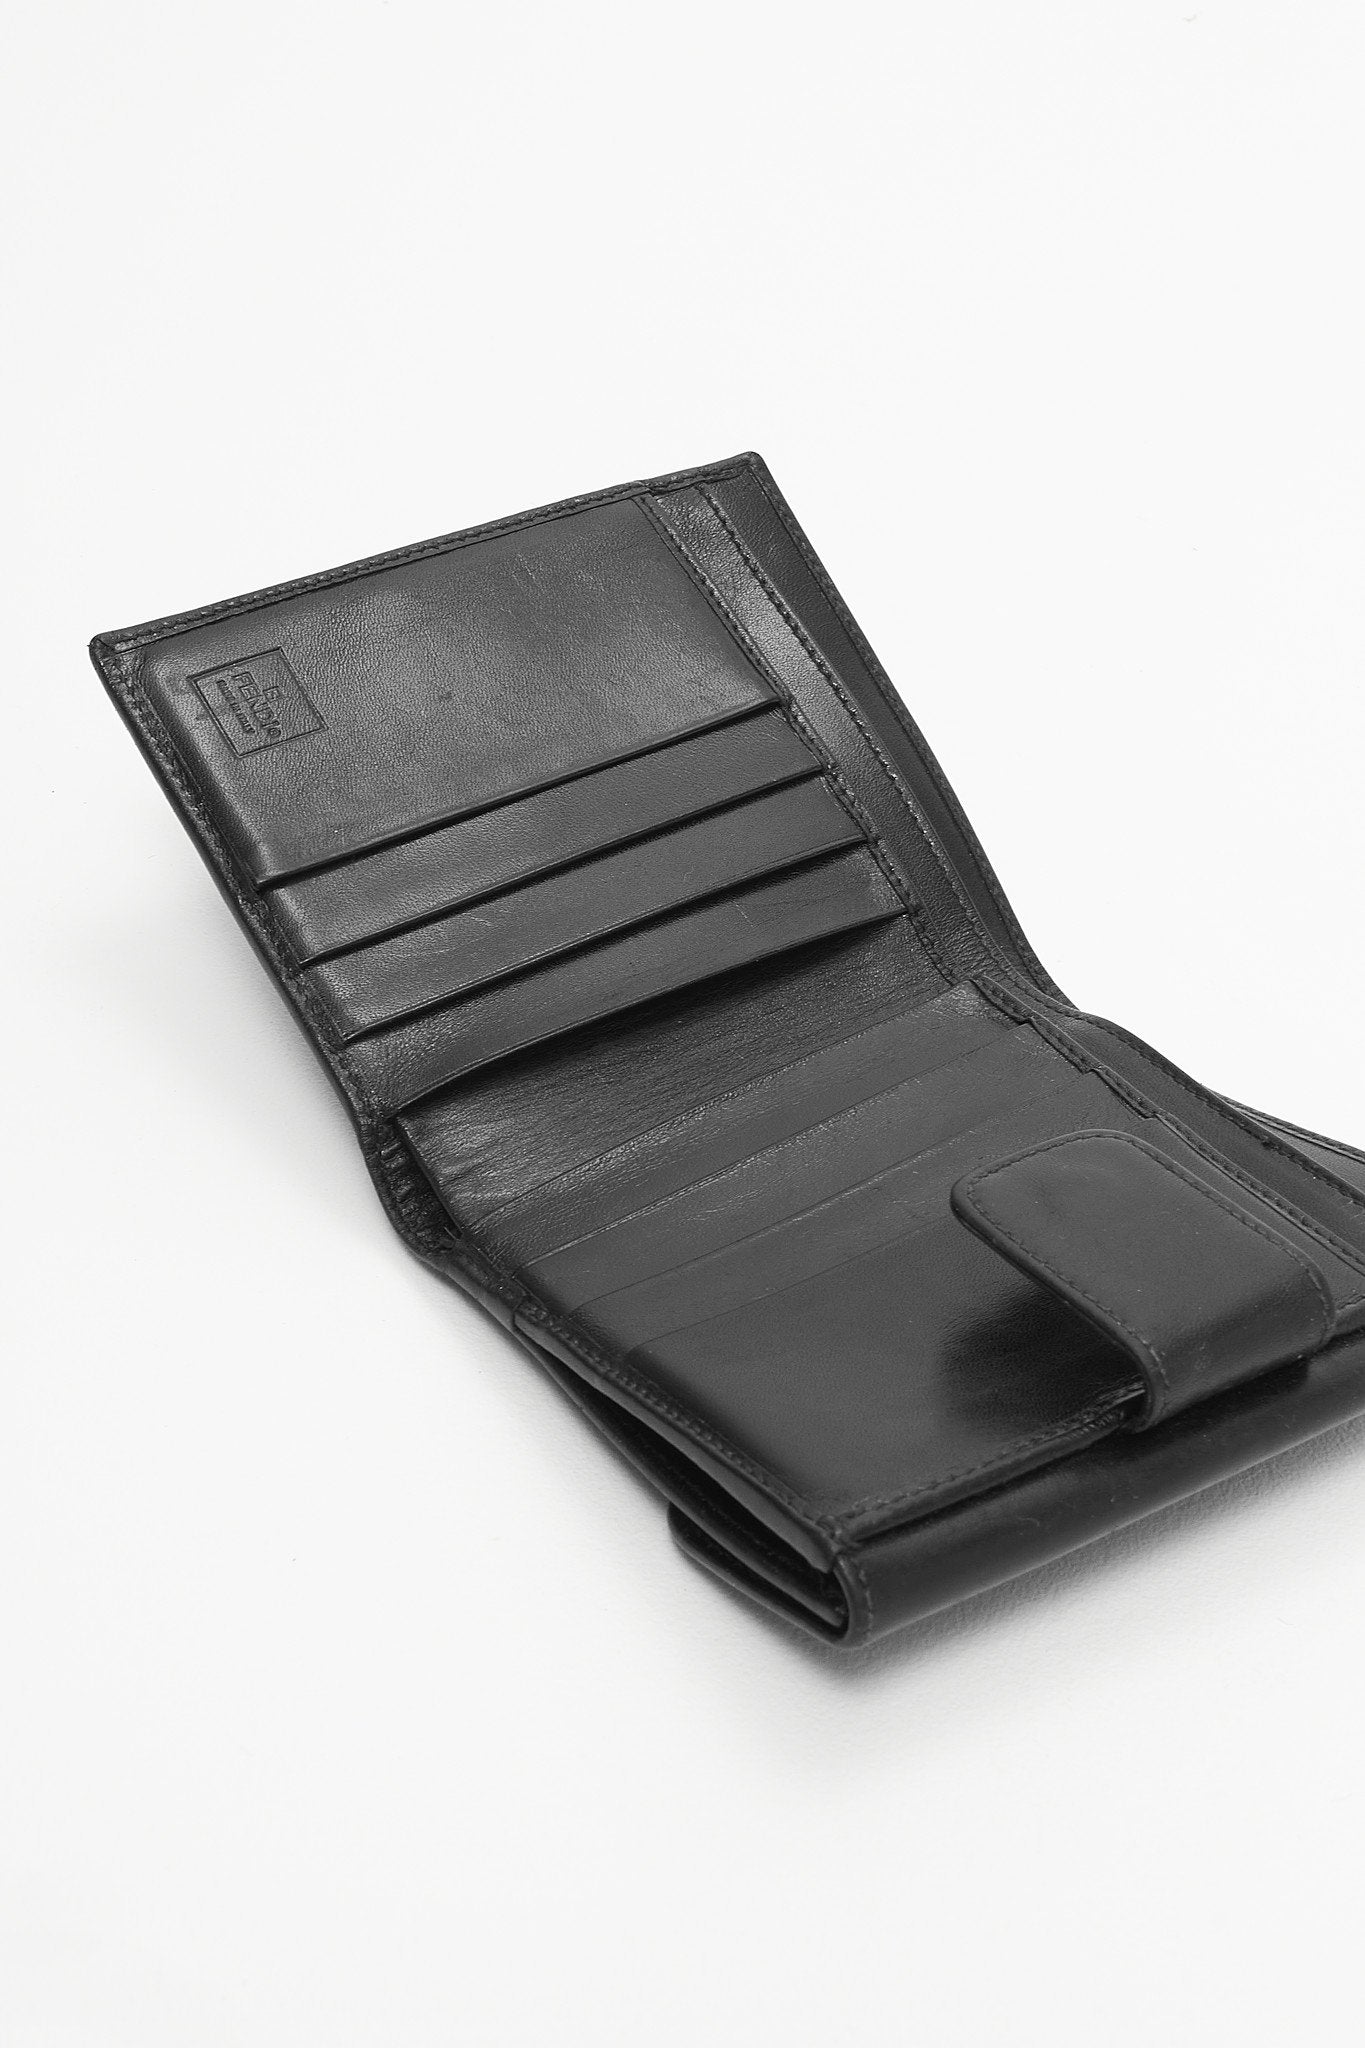 Fendi Black Leather Compact Wallet